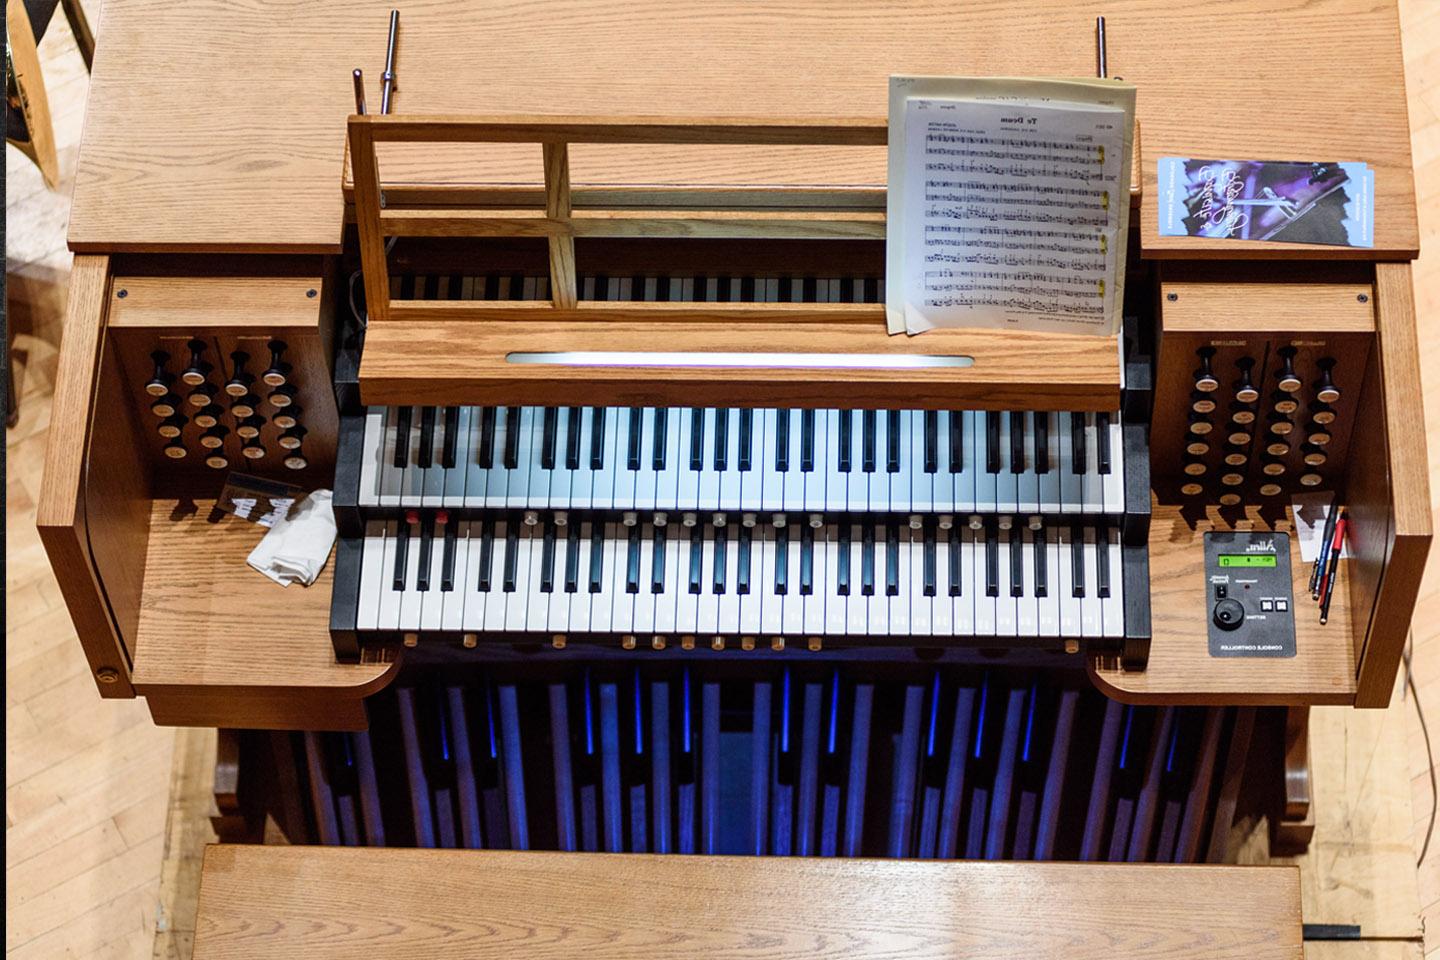 Organ on stage